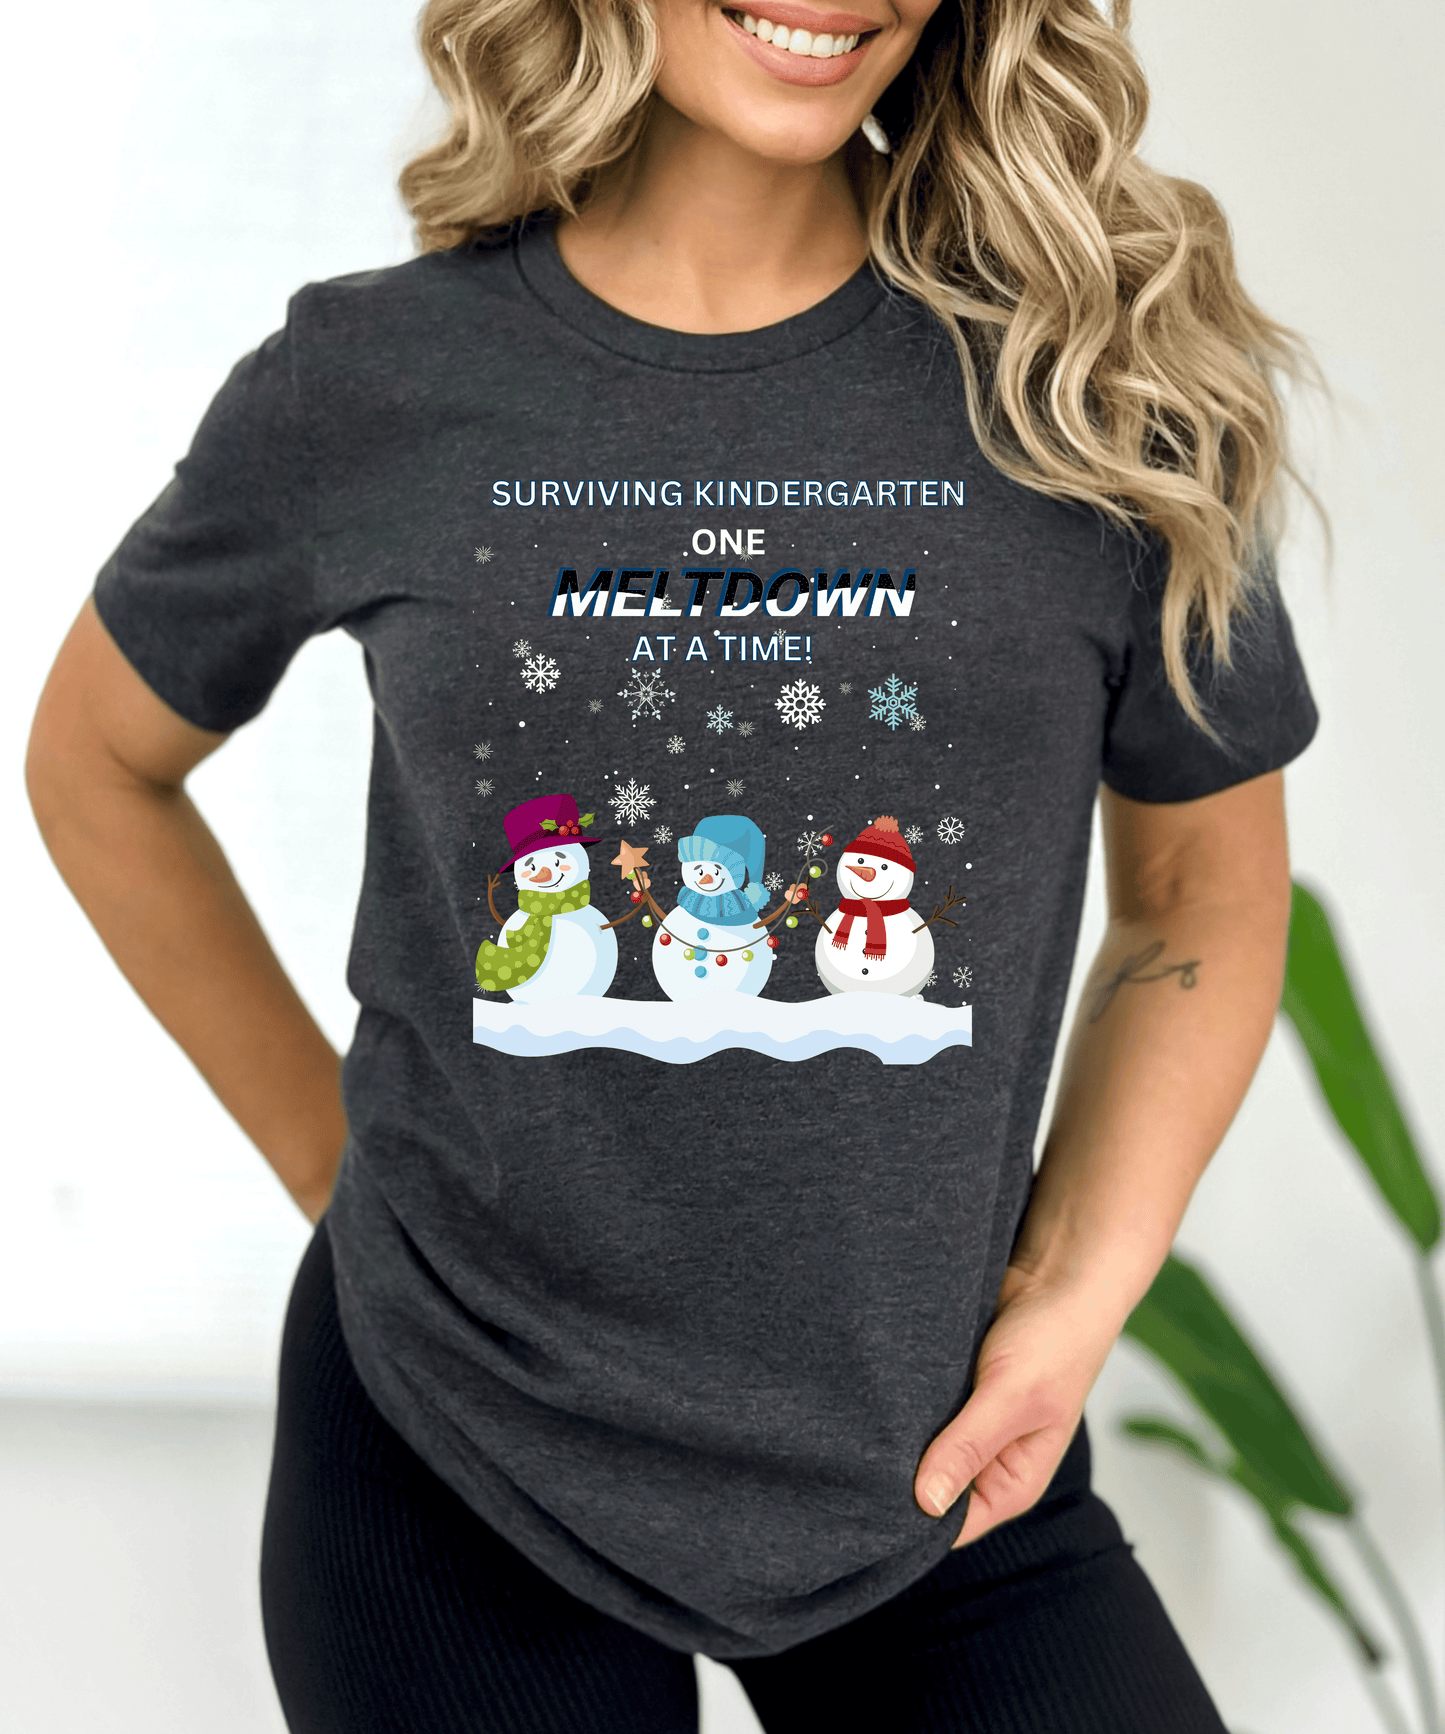 Surviving Kindergarten t-shirt